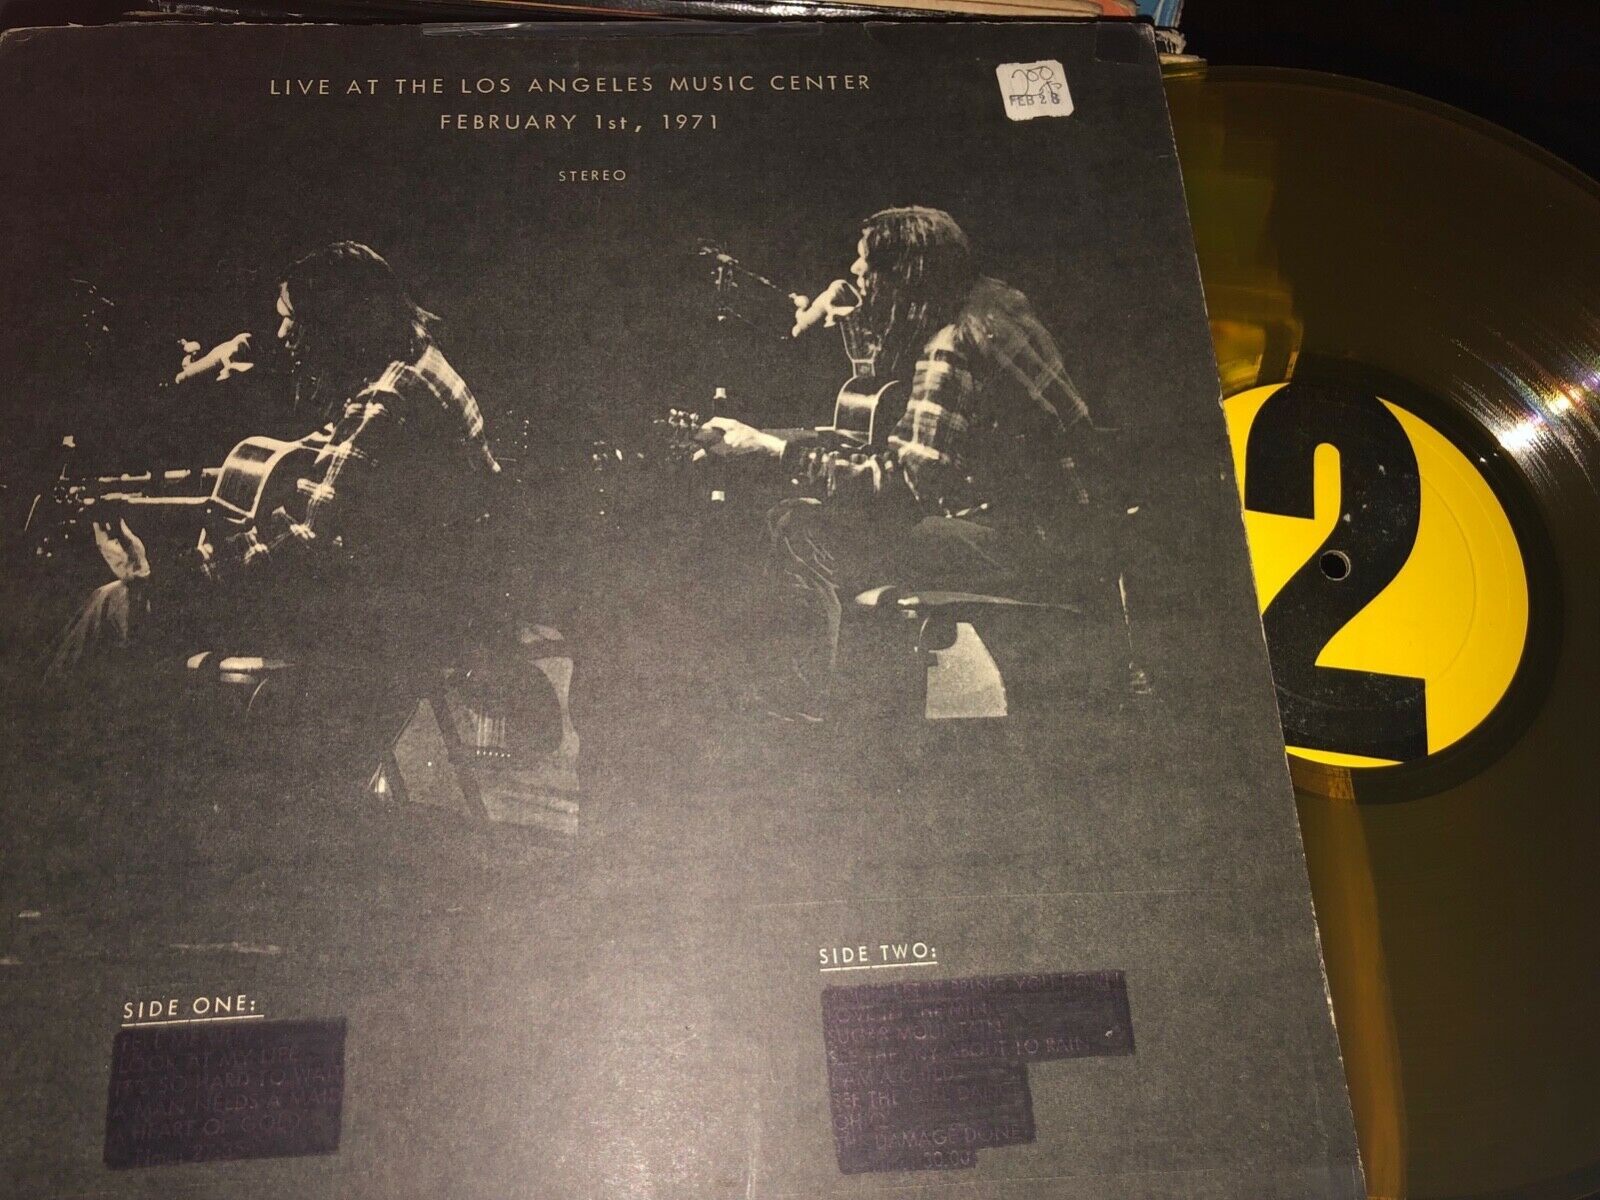 NEIL YOUNG - LIVE Bootleg LA Feb 01 ‘71 “Live at LA Music Center" Yellow vinyl